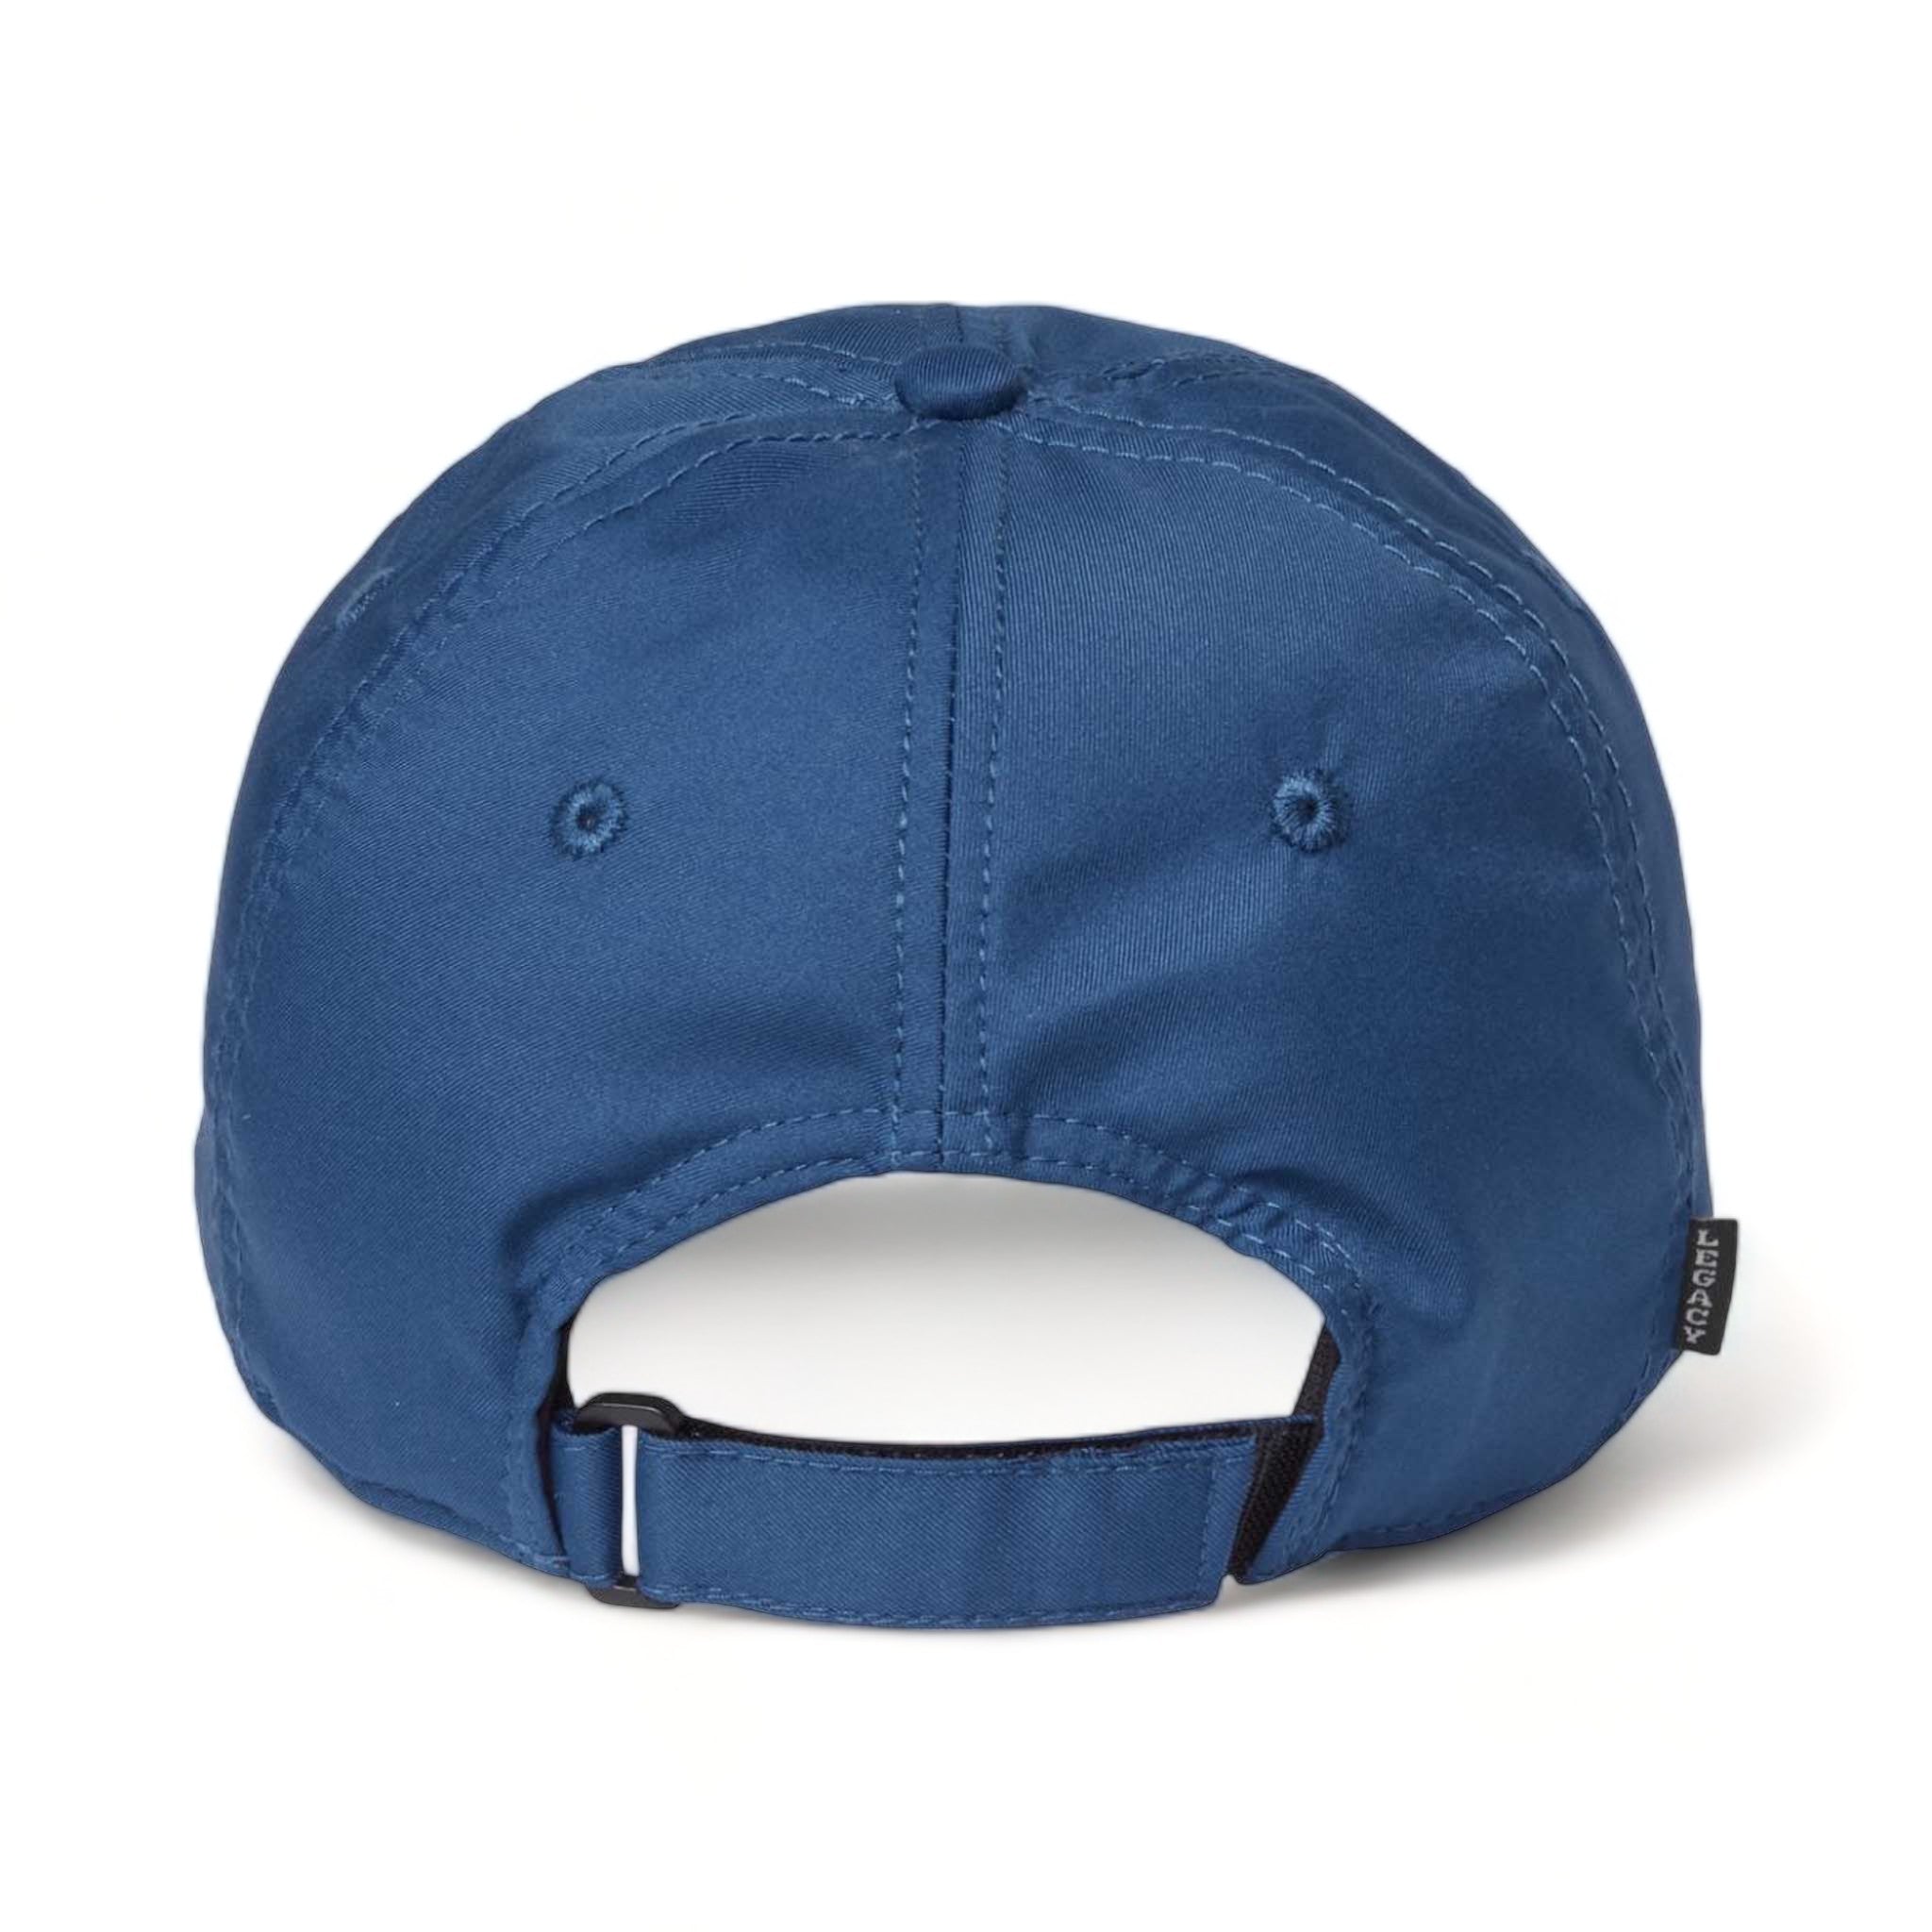 Back view of LEGACY CFA custom hat in dark blue